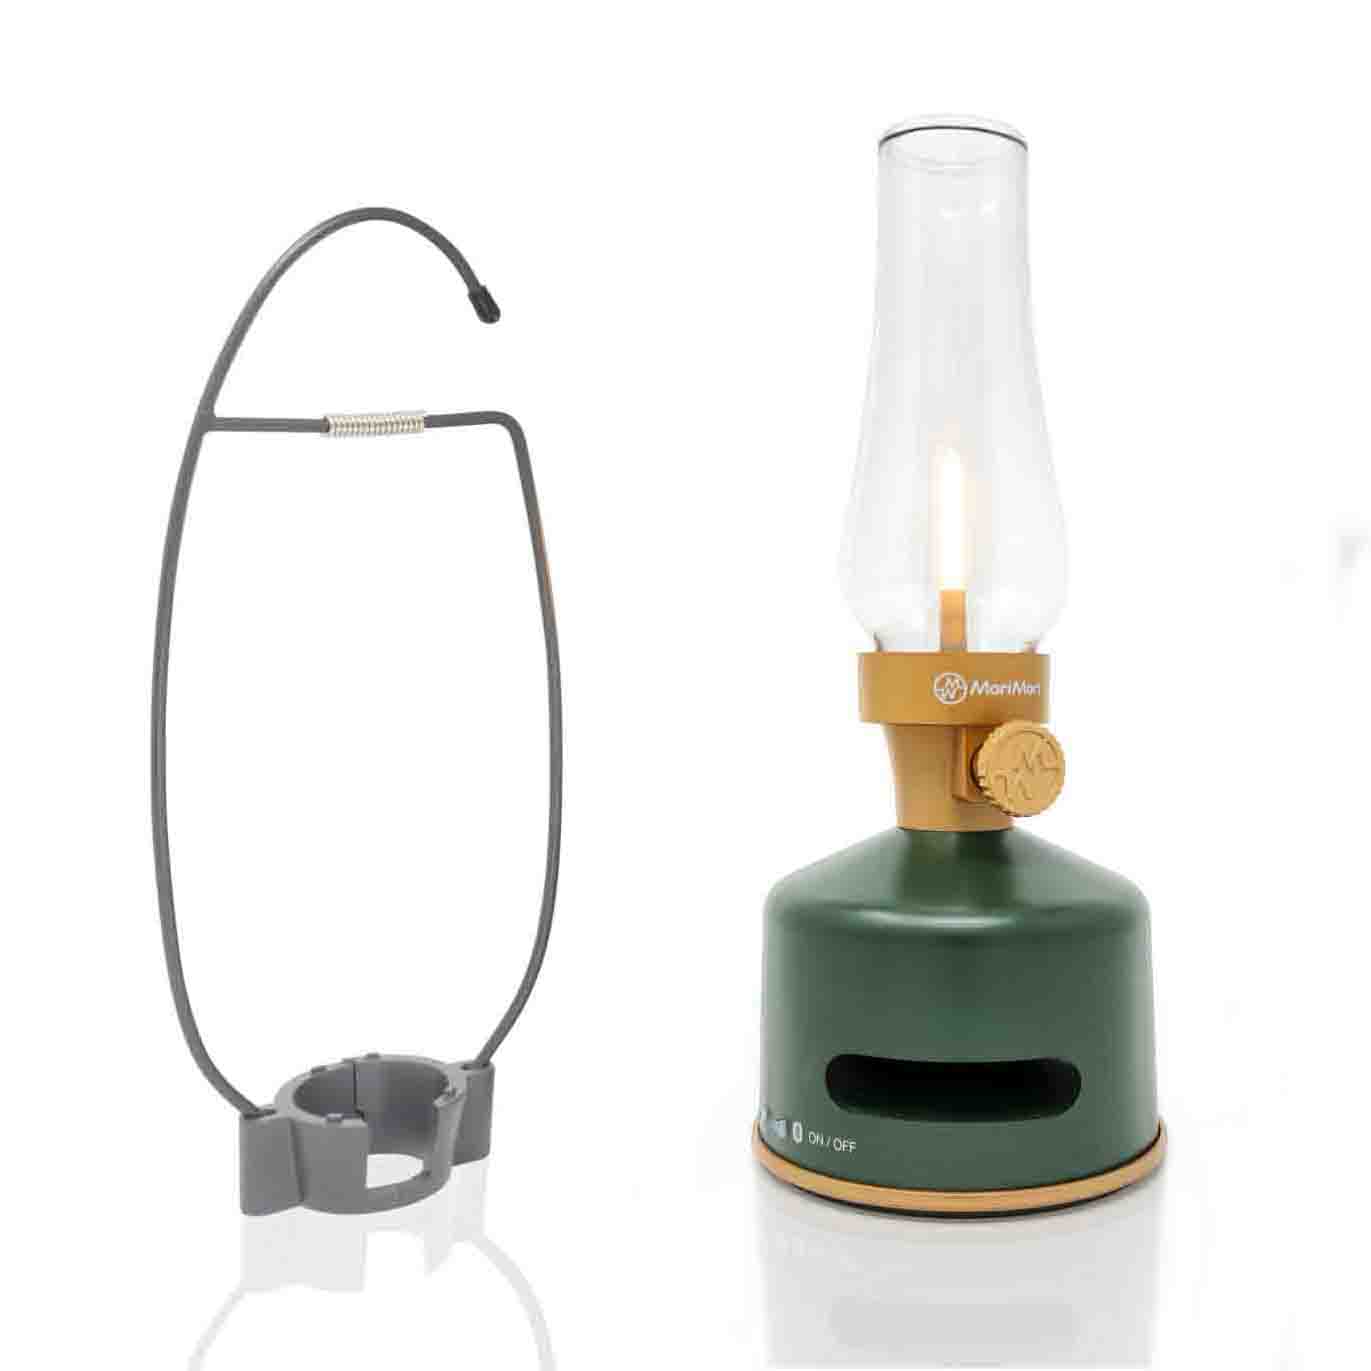 MoriMori LED Lantern & Bluetooth Speaker Original Green│Buitenverlichting Oplaadbaar│art. FLS-2101-DG│lamp met losse hanger